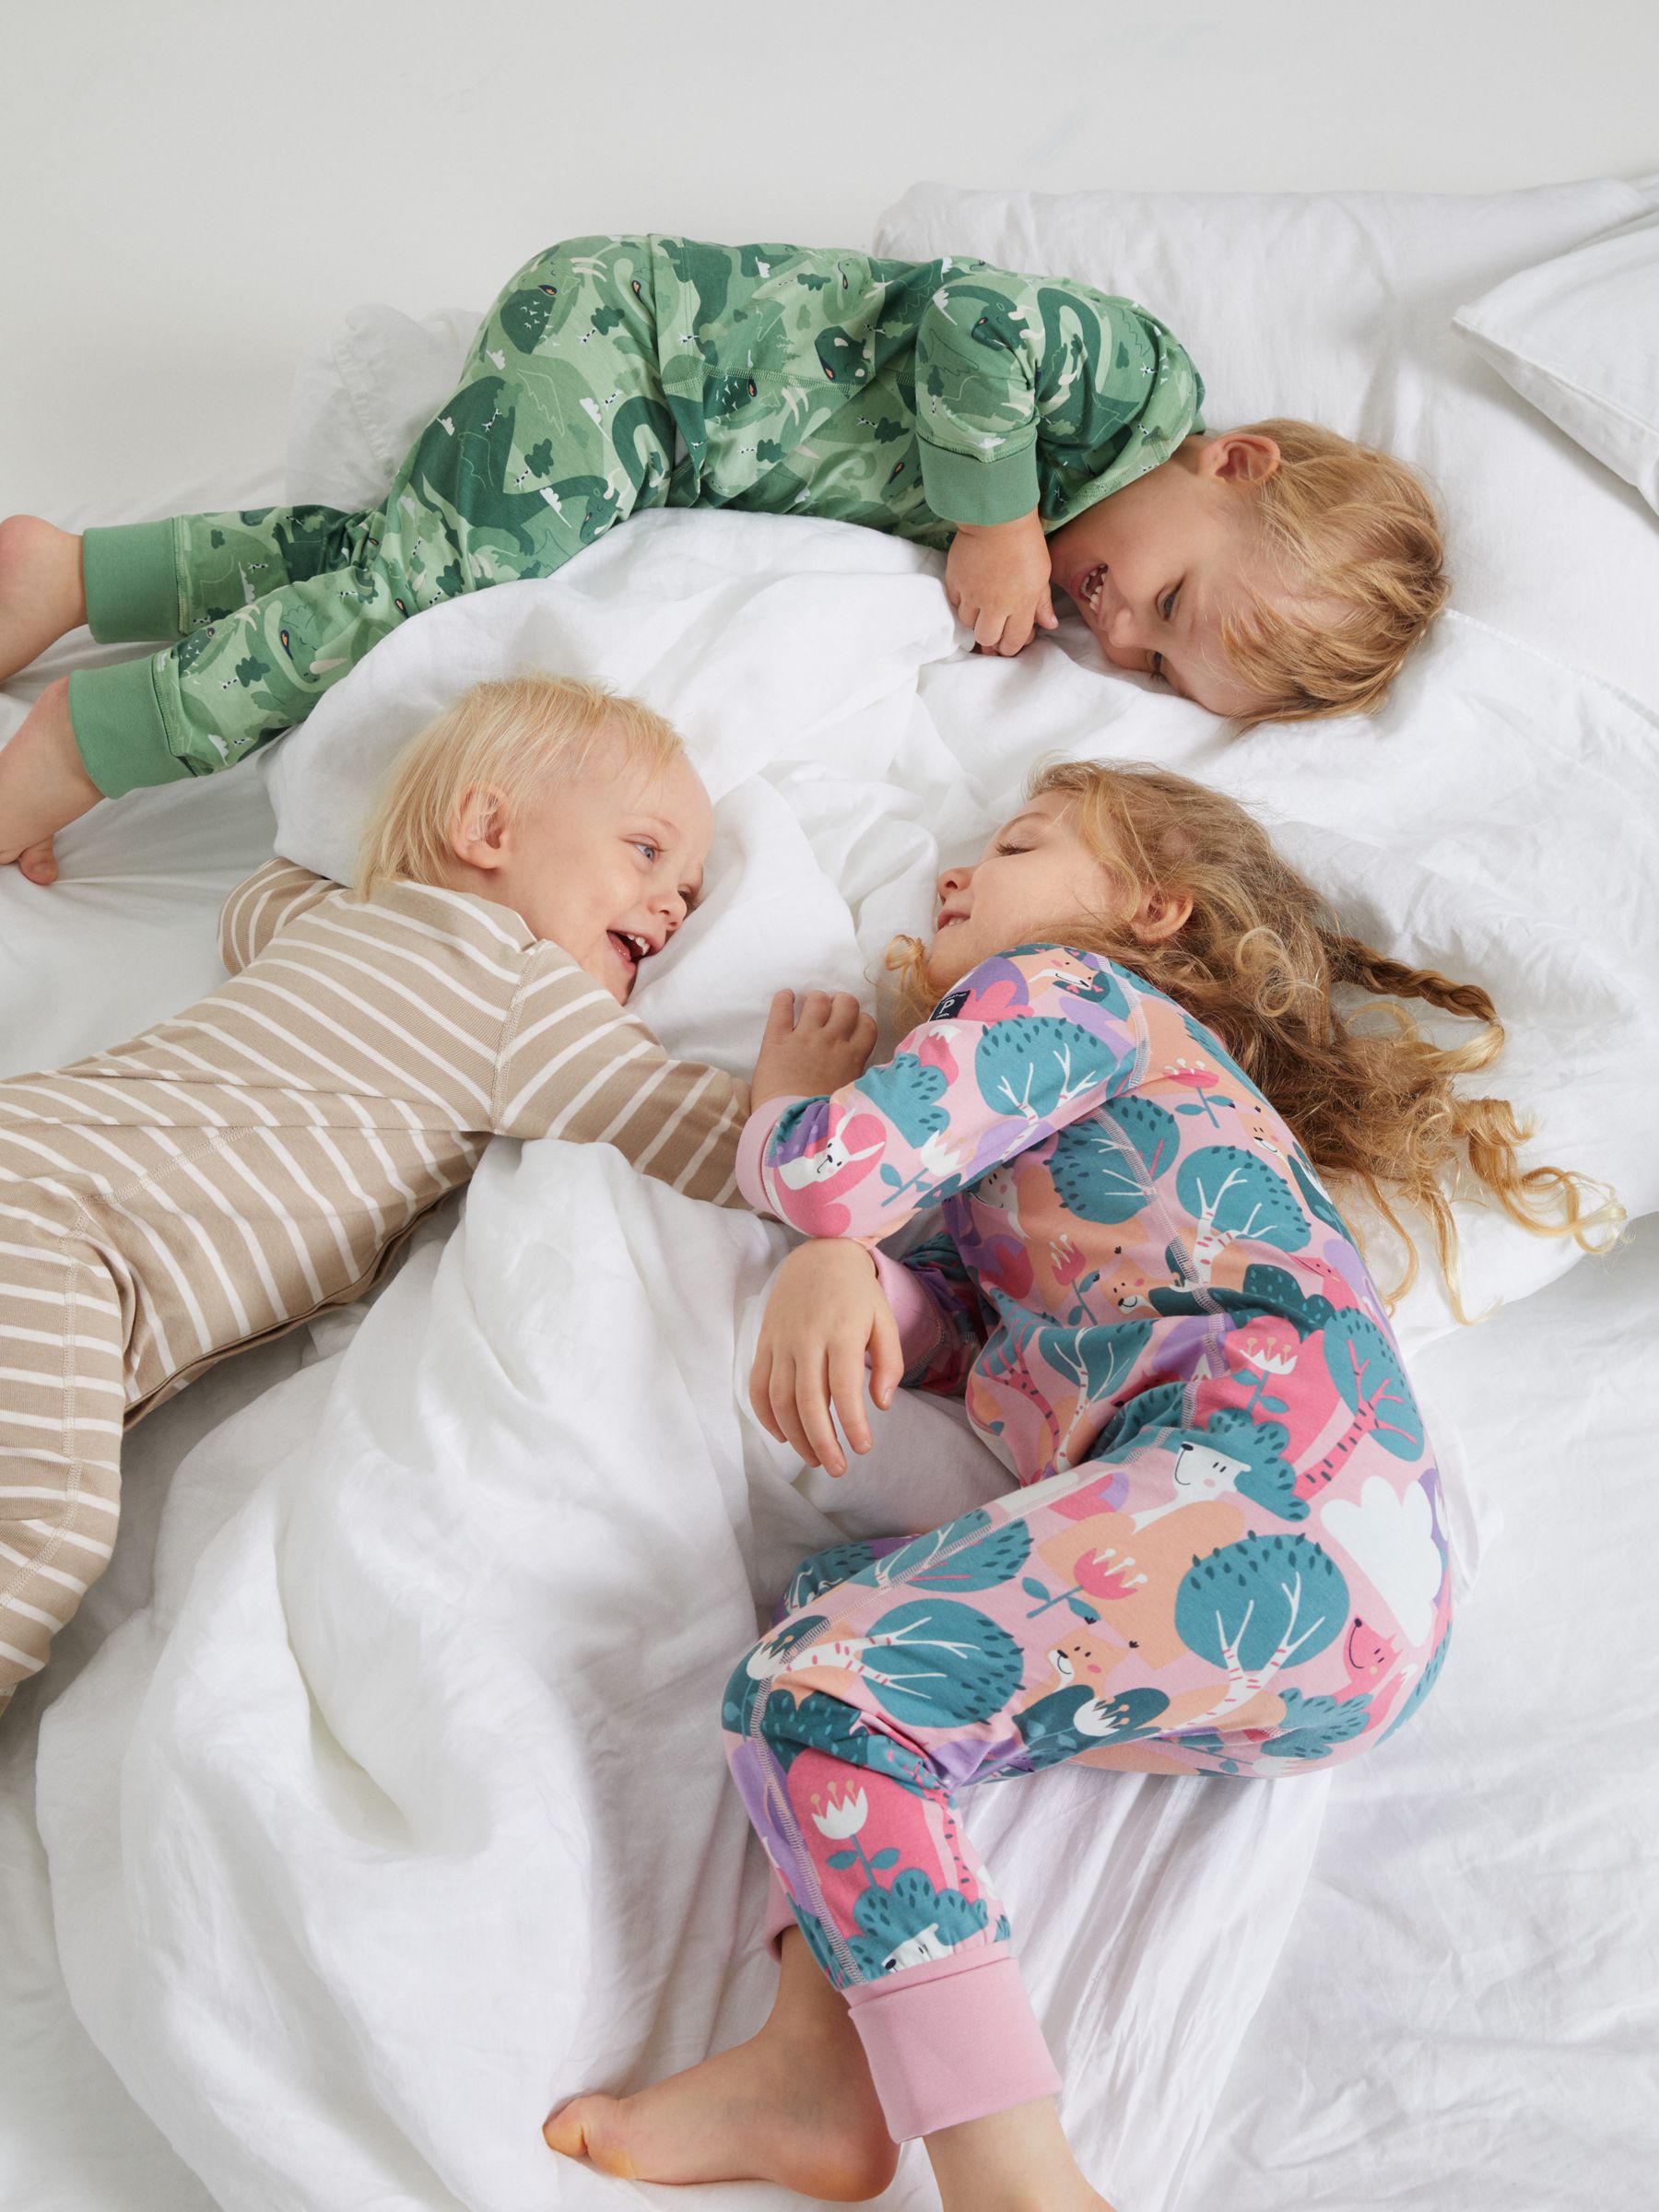 Buy Polarn O. Pyret Kids' Organic Cotton Dragon Print Pyjamas, Green Online at johnlewis.com